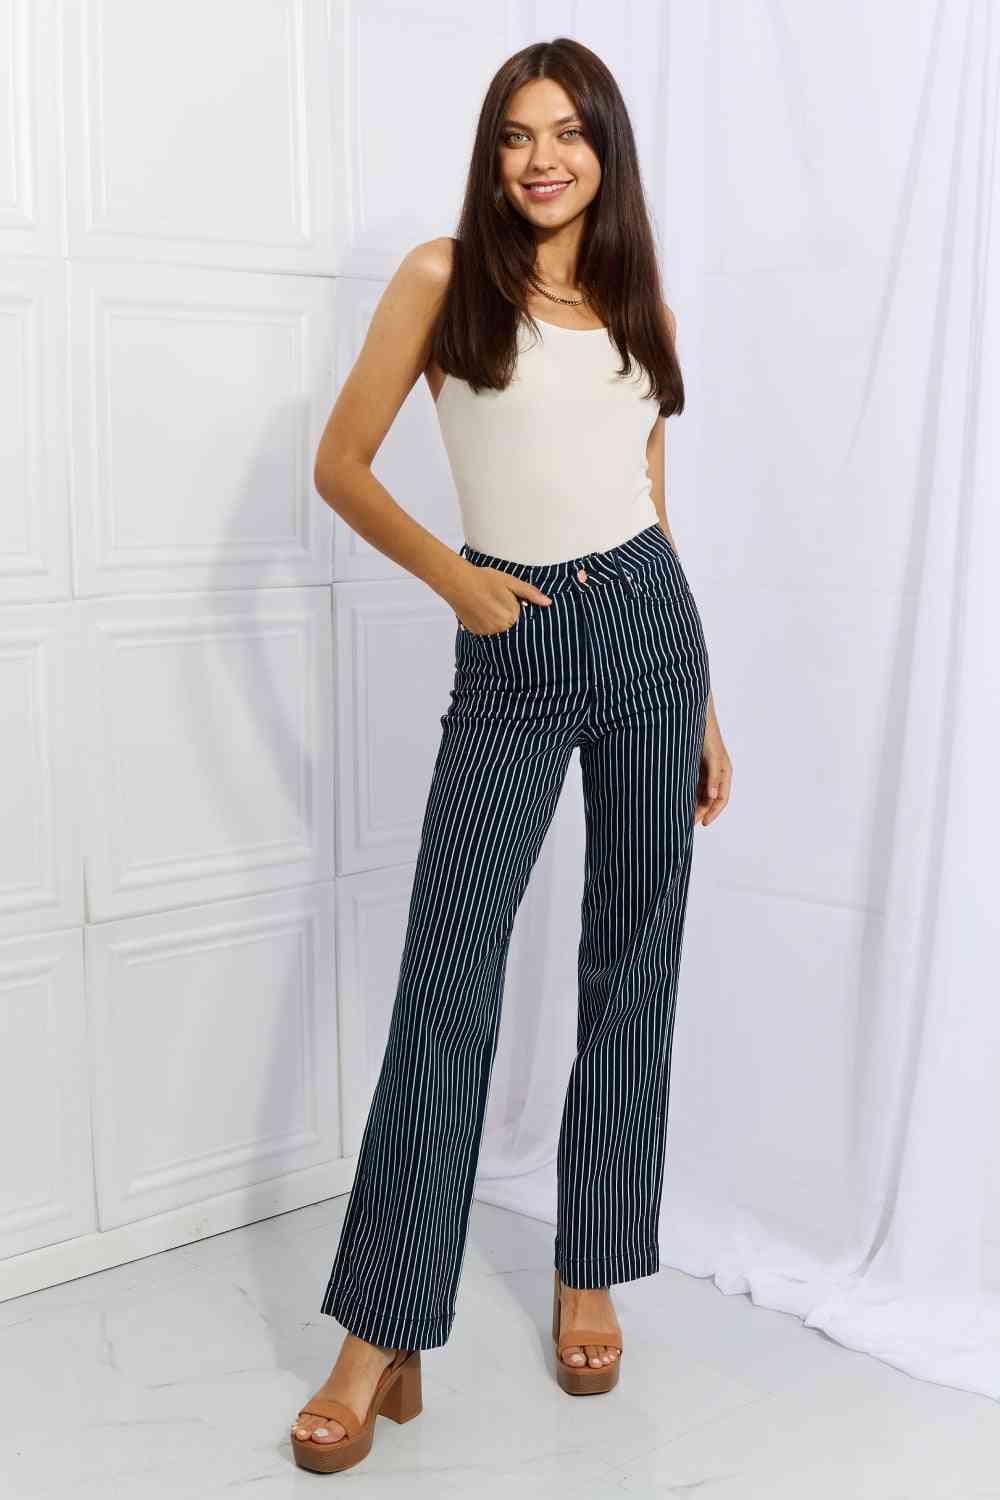 Bona Fide Fashion - Full Size High Waisted Tummy Control Striped Straight Jeans - Women Fashion - Bona Fide Fashion